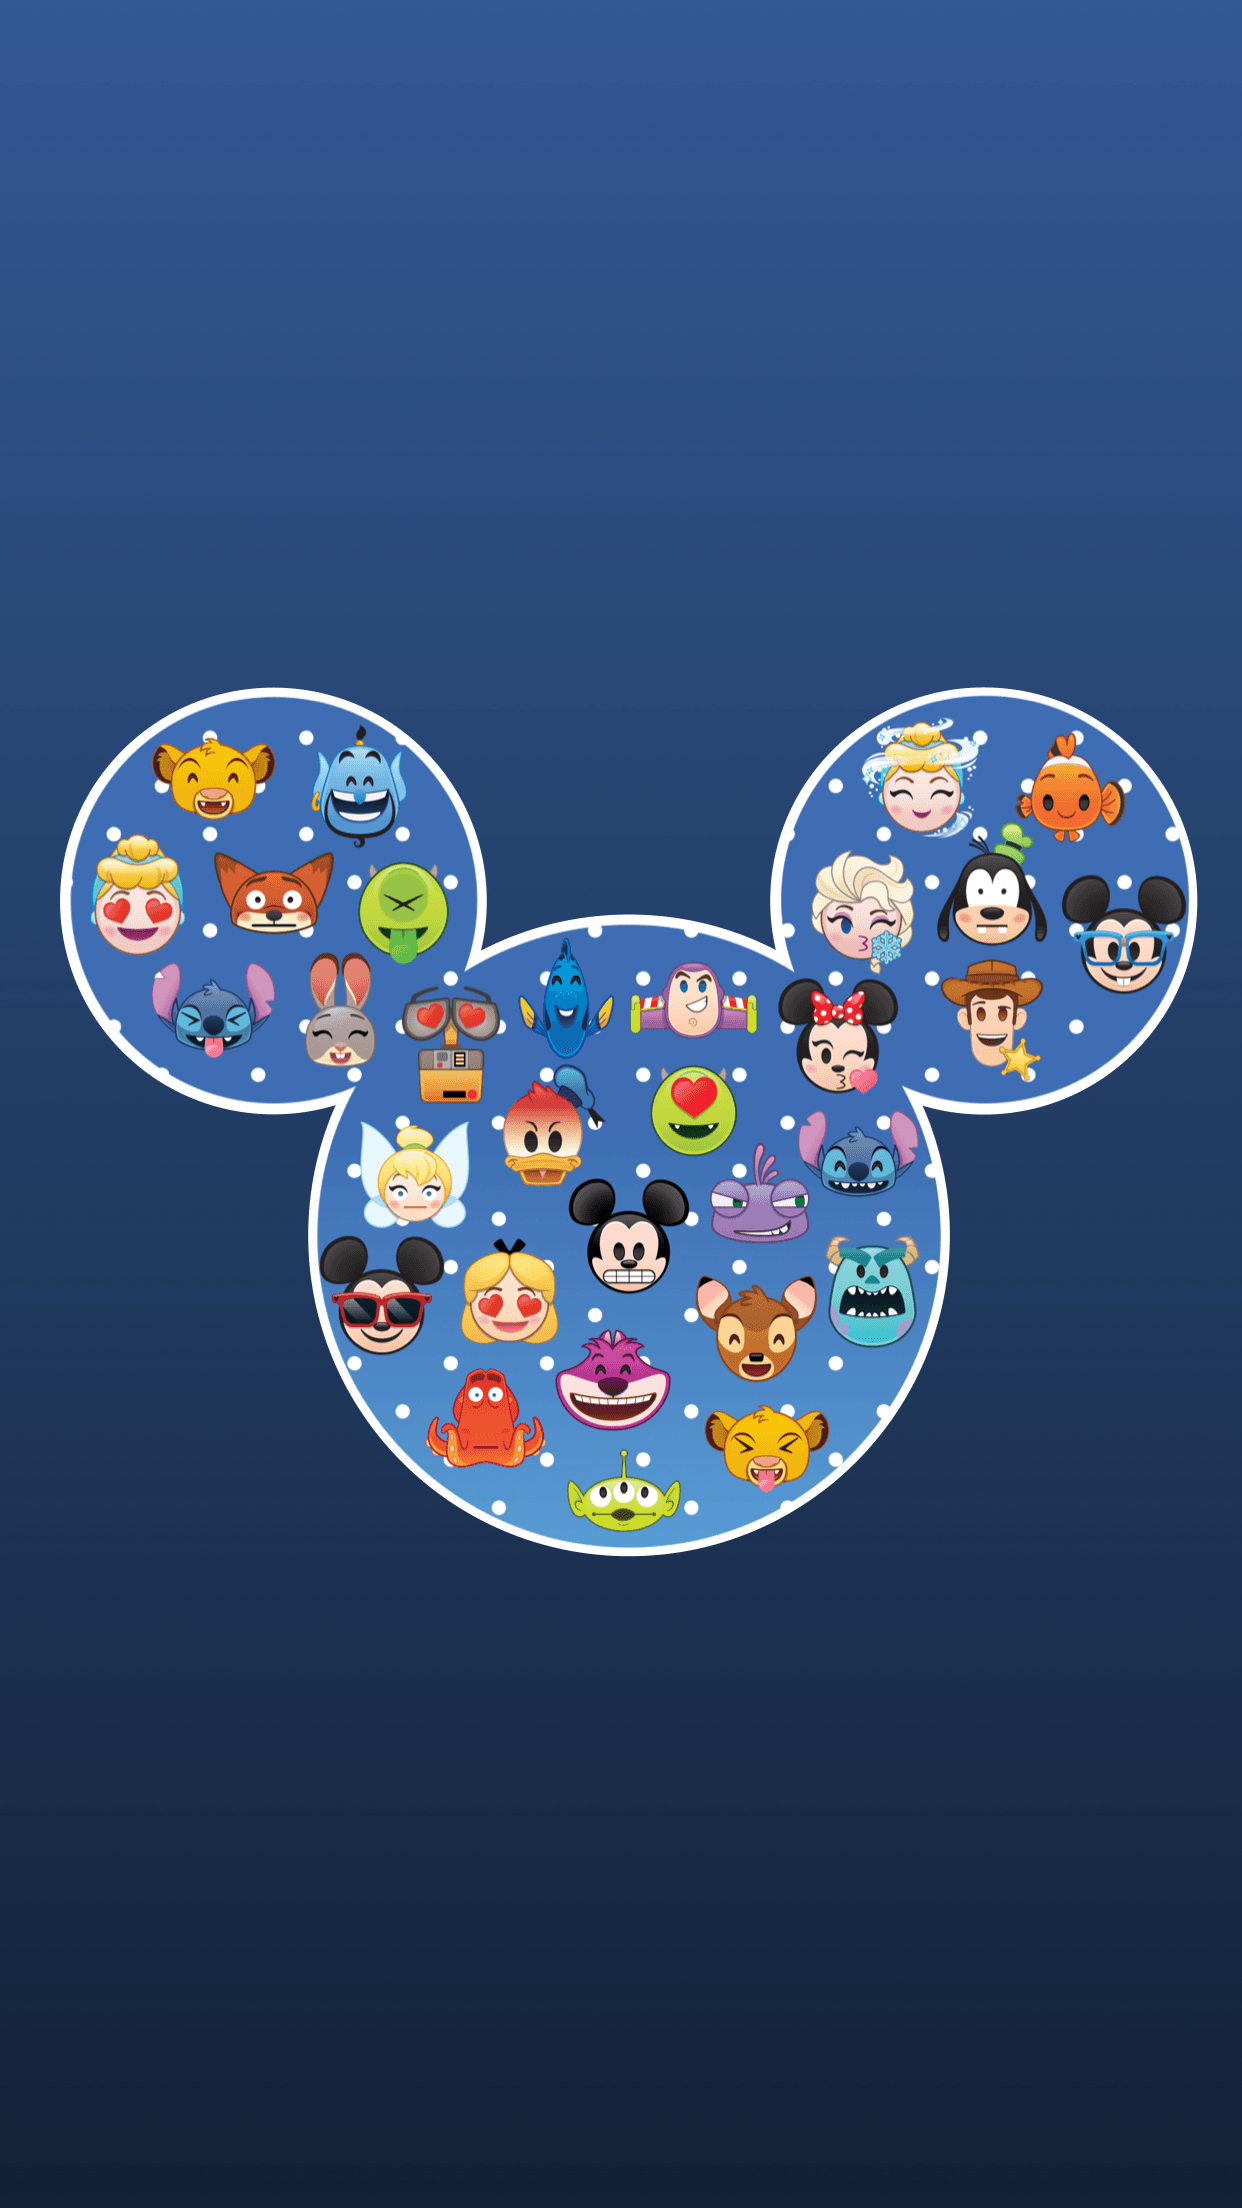 Disney Emoji blitz phone wallpaper. Disney phone wallpaper, Disney emoji blitz, Disney wallpaper